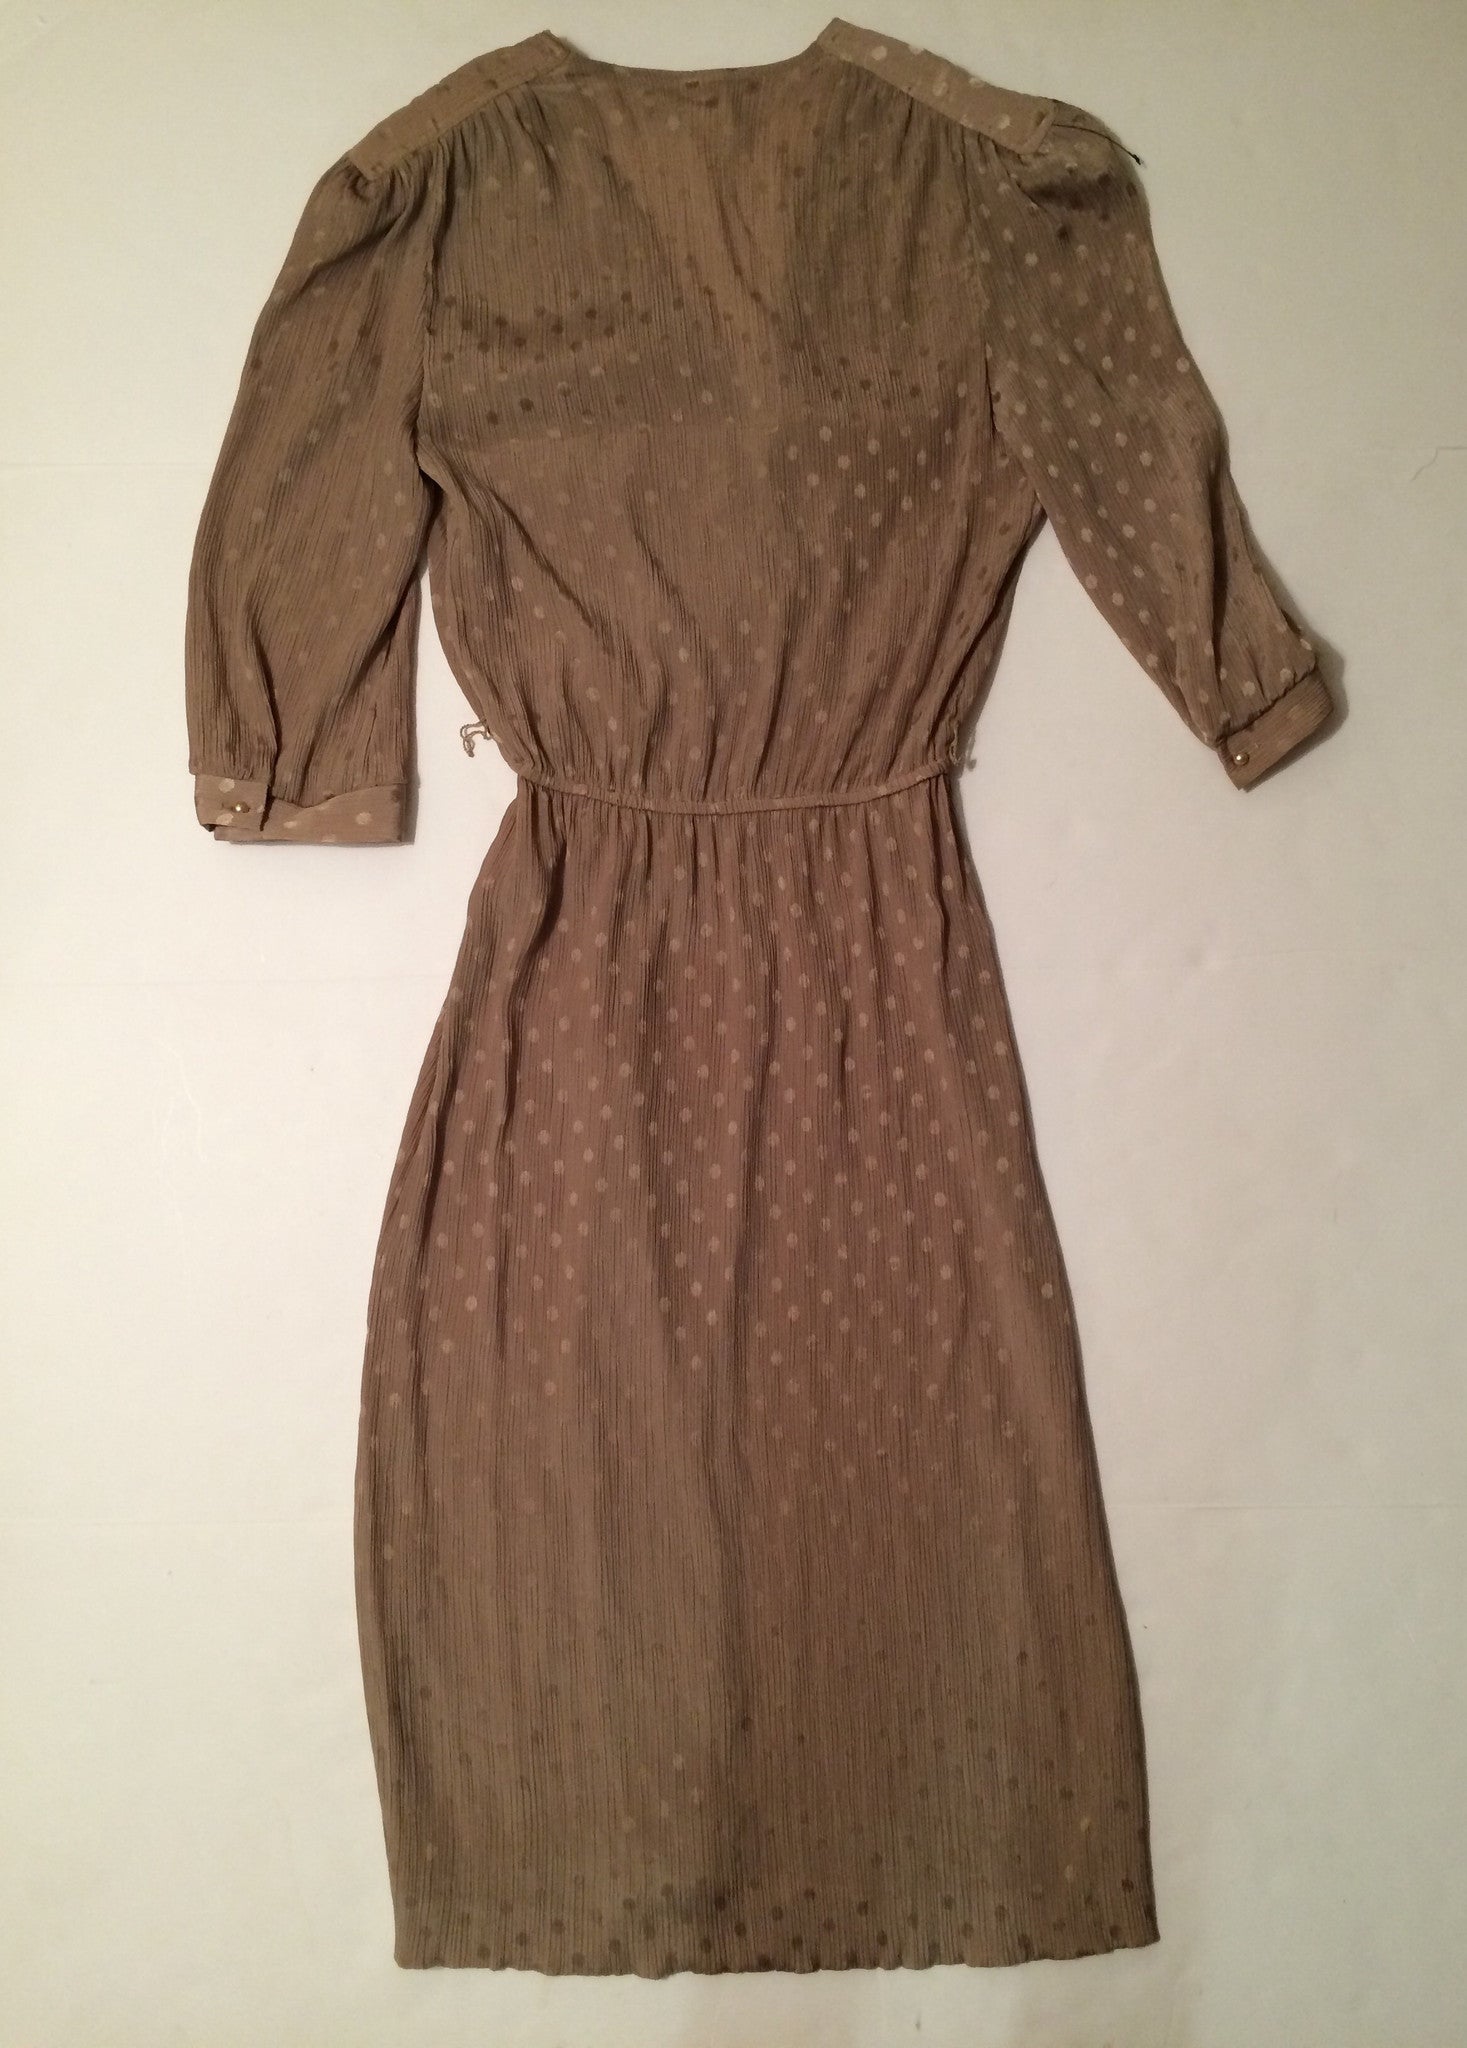 Vintage Midi Dress - Size 6